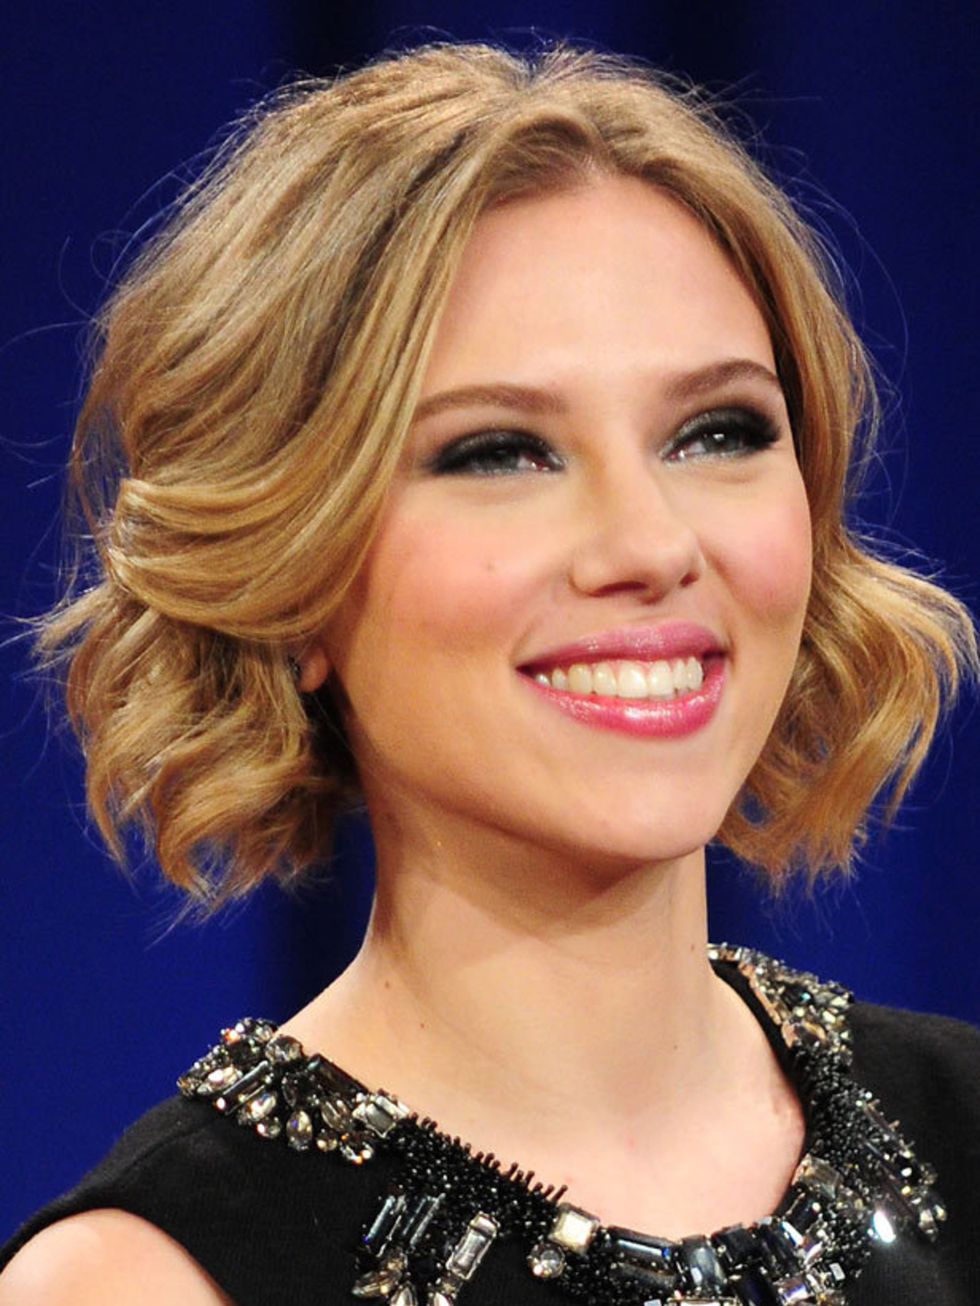 <p><a href="http://www.elleuk.com/beauty/celeb-beauty/celeb-beauty-bags/%28section%29/Scarlett-Johansson-s-Favourite-Beauty-Buys">See the beauty products Scarlett loves...</a></p>